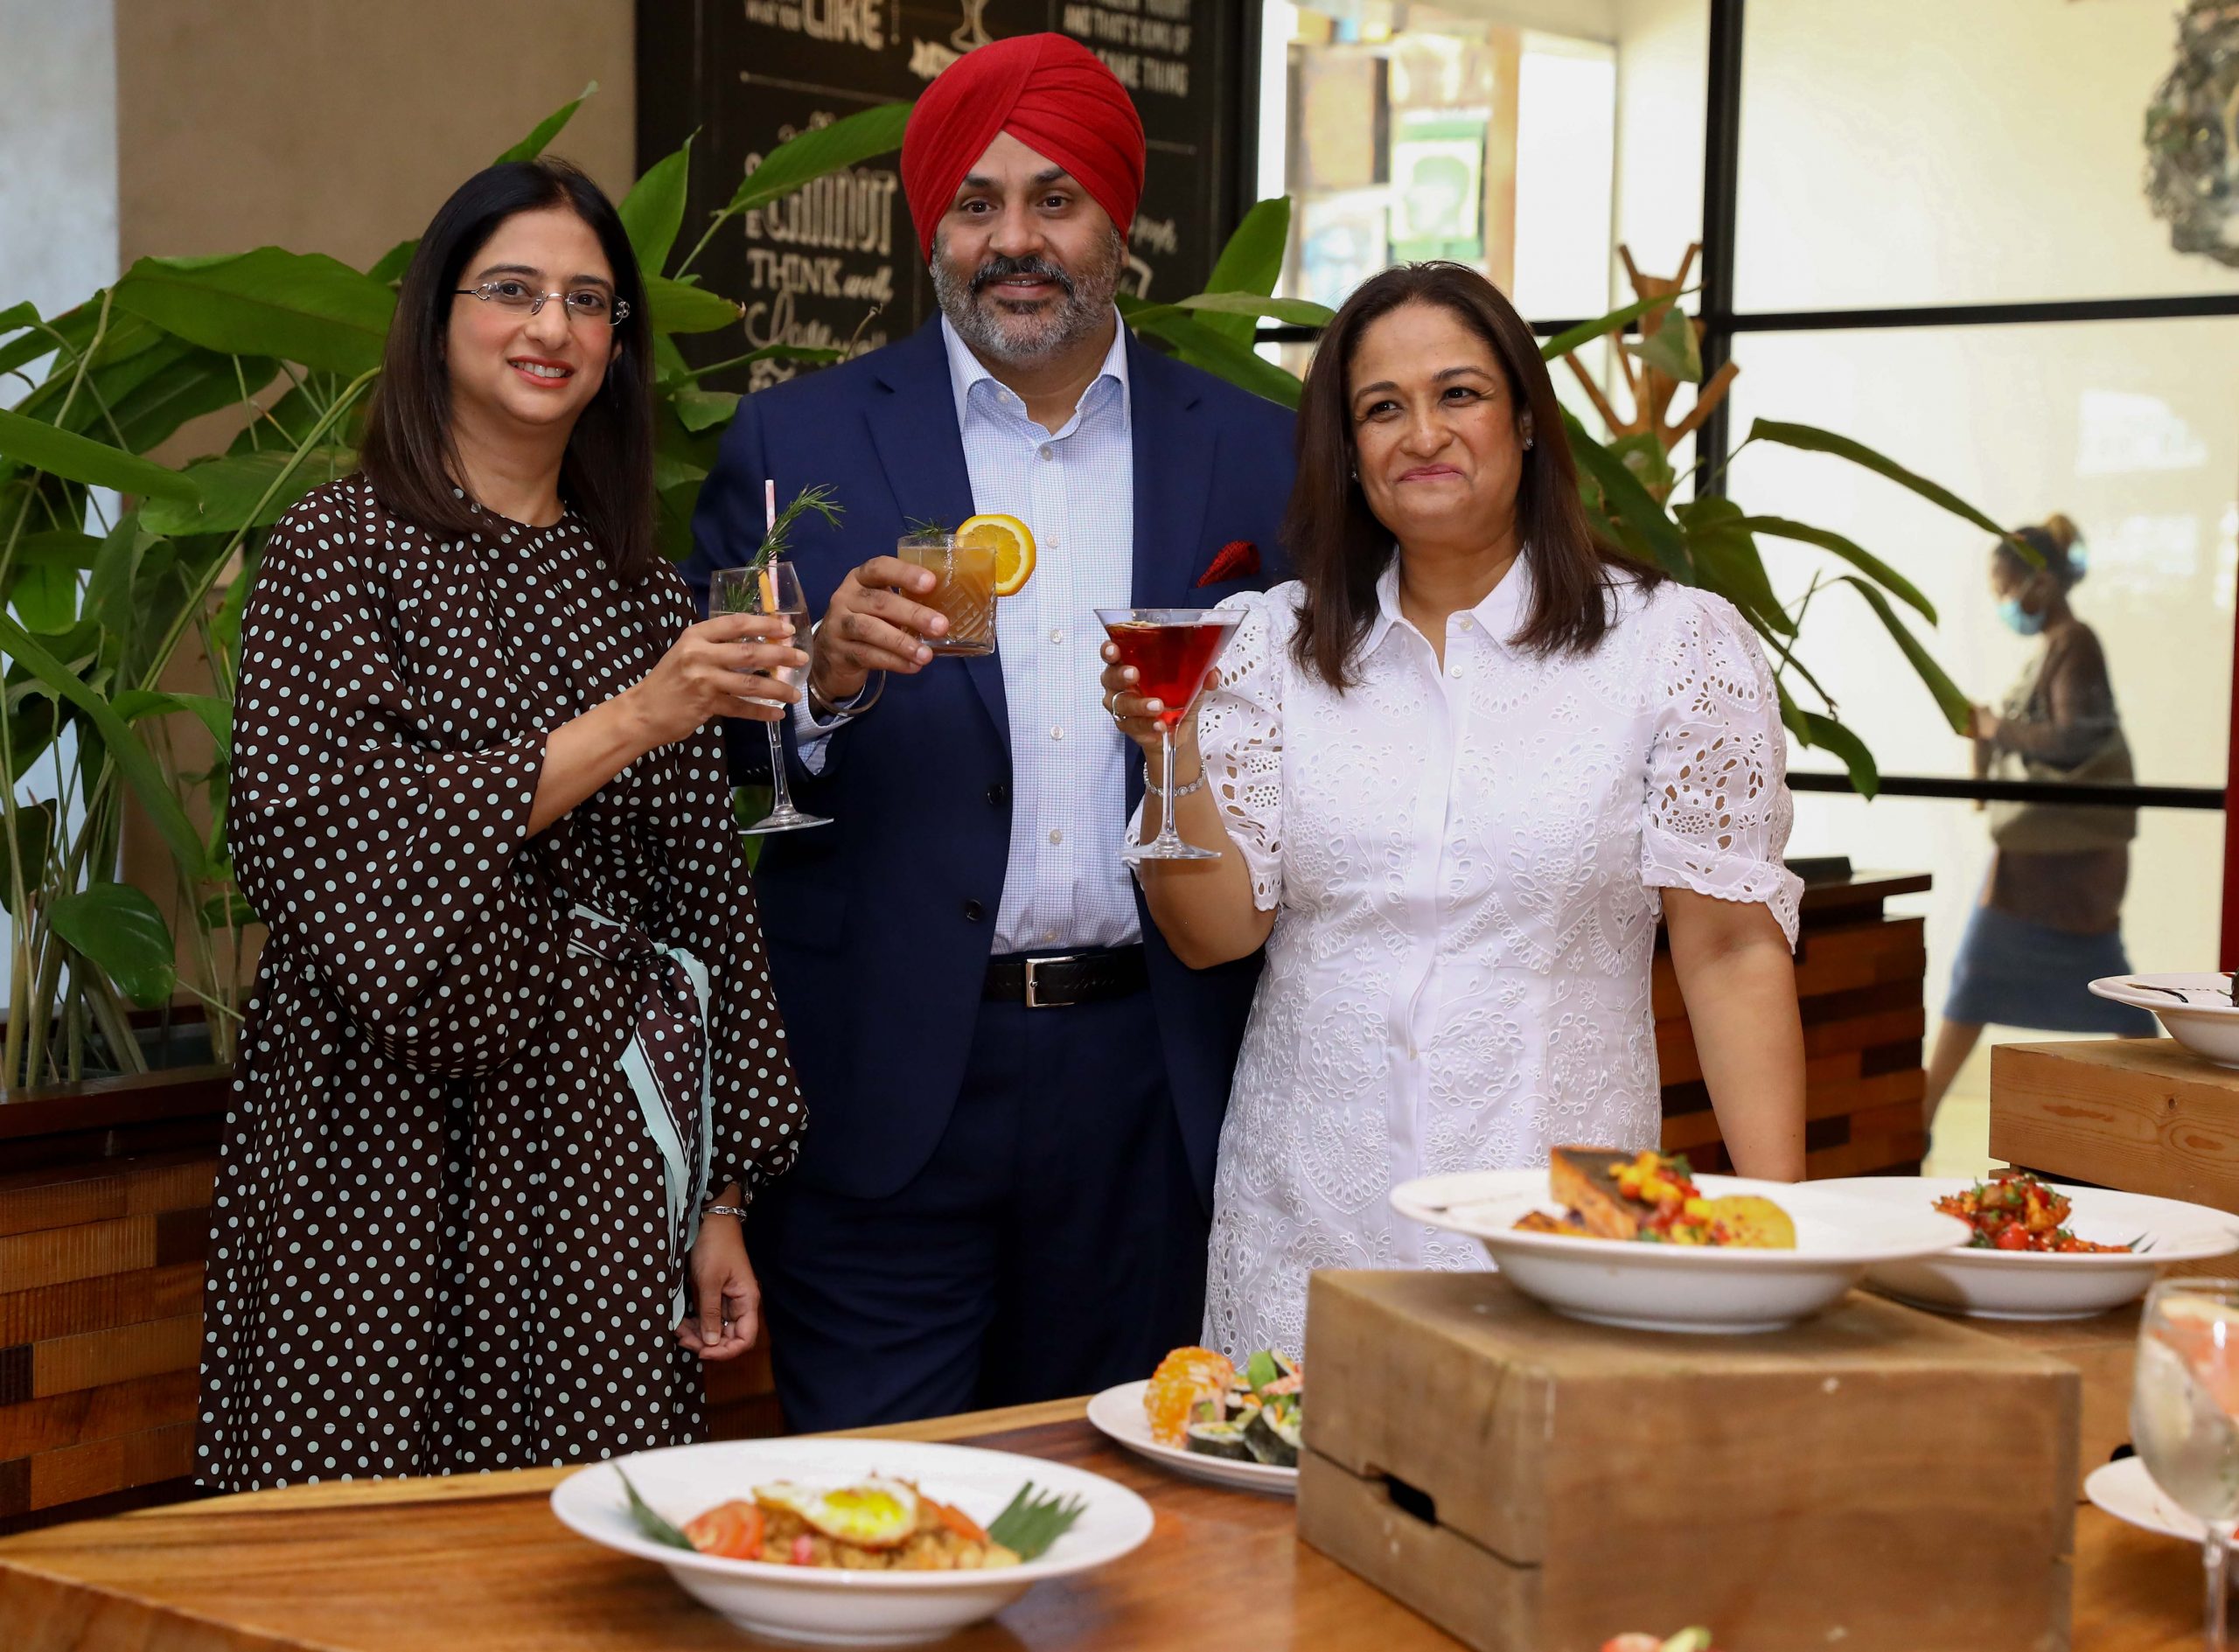 Aarti Devani, Shailender Singh, Director, Food and Beverage Operations, Sarova and Mira Agarwa at the launch of 2 Sarova restaurant brands in Westlands, Nairobi.